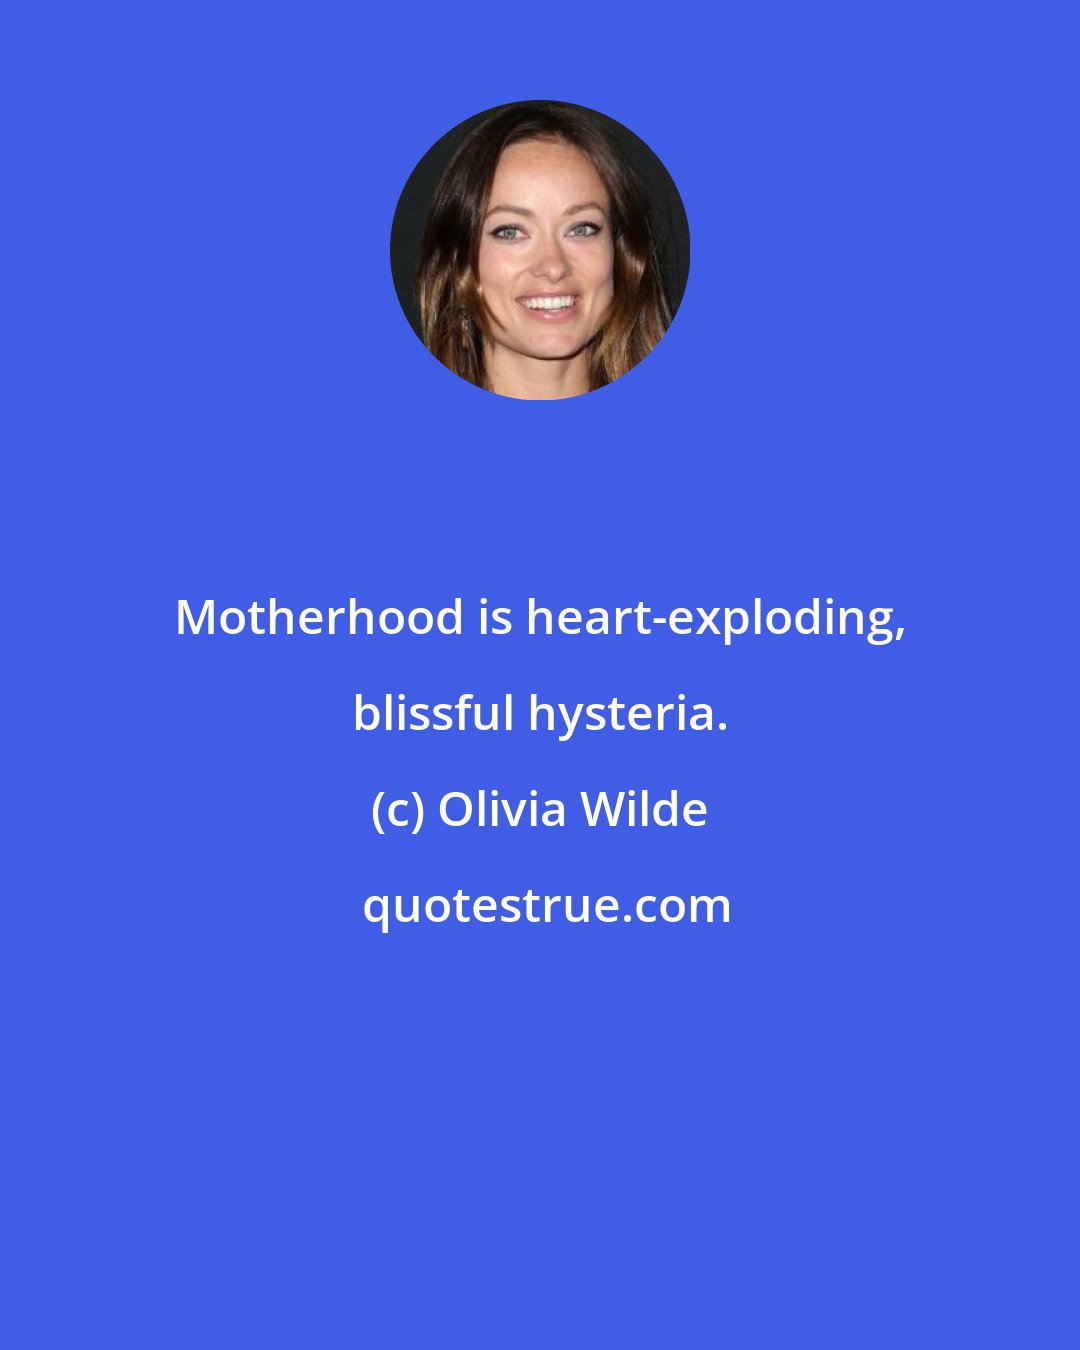 Olivia Wilde: Motherhood is heart-exploding, blissful hysteria.